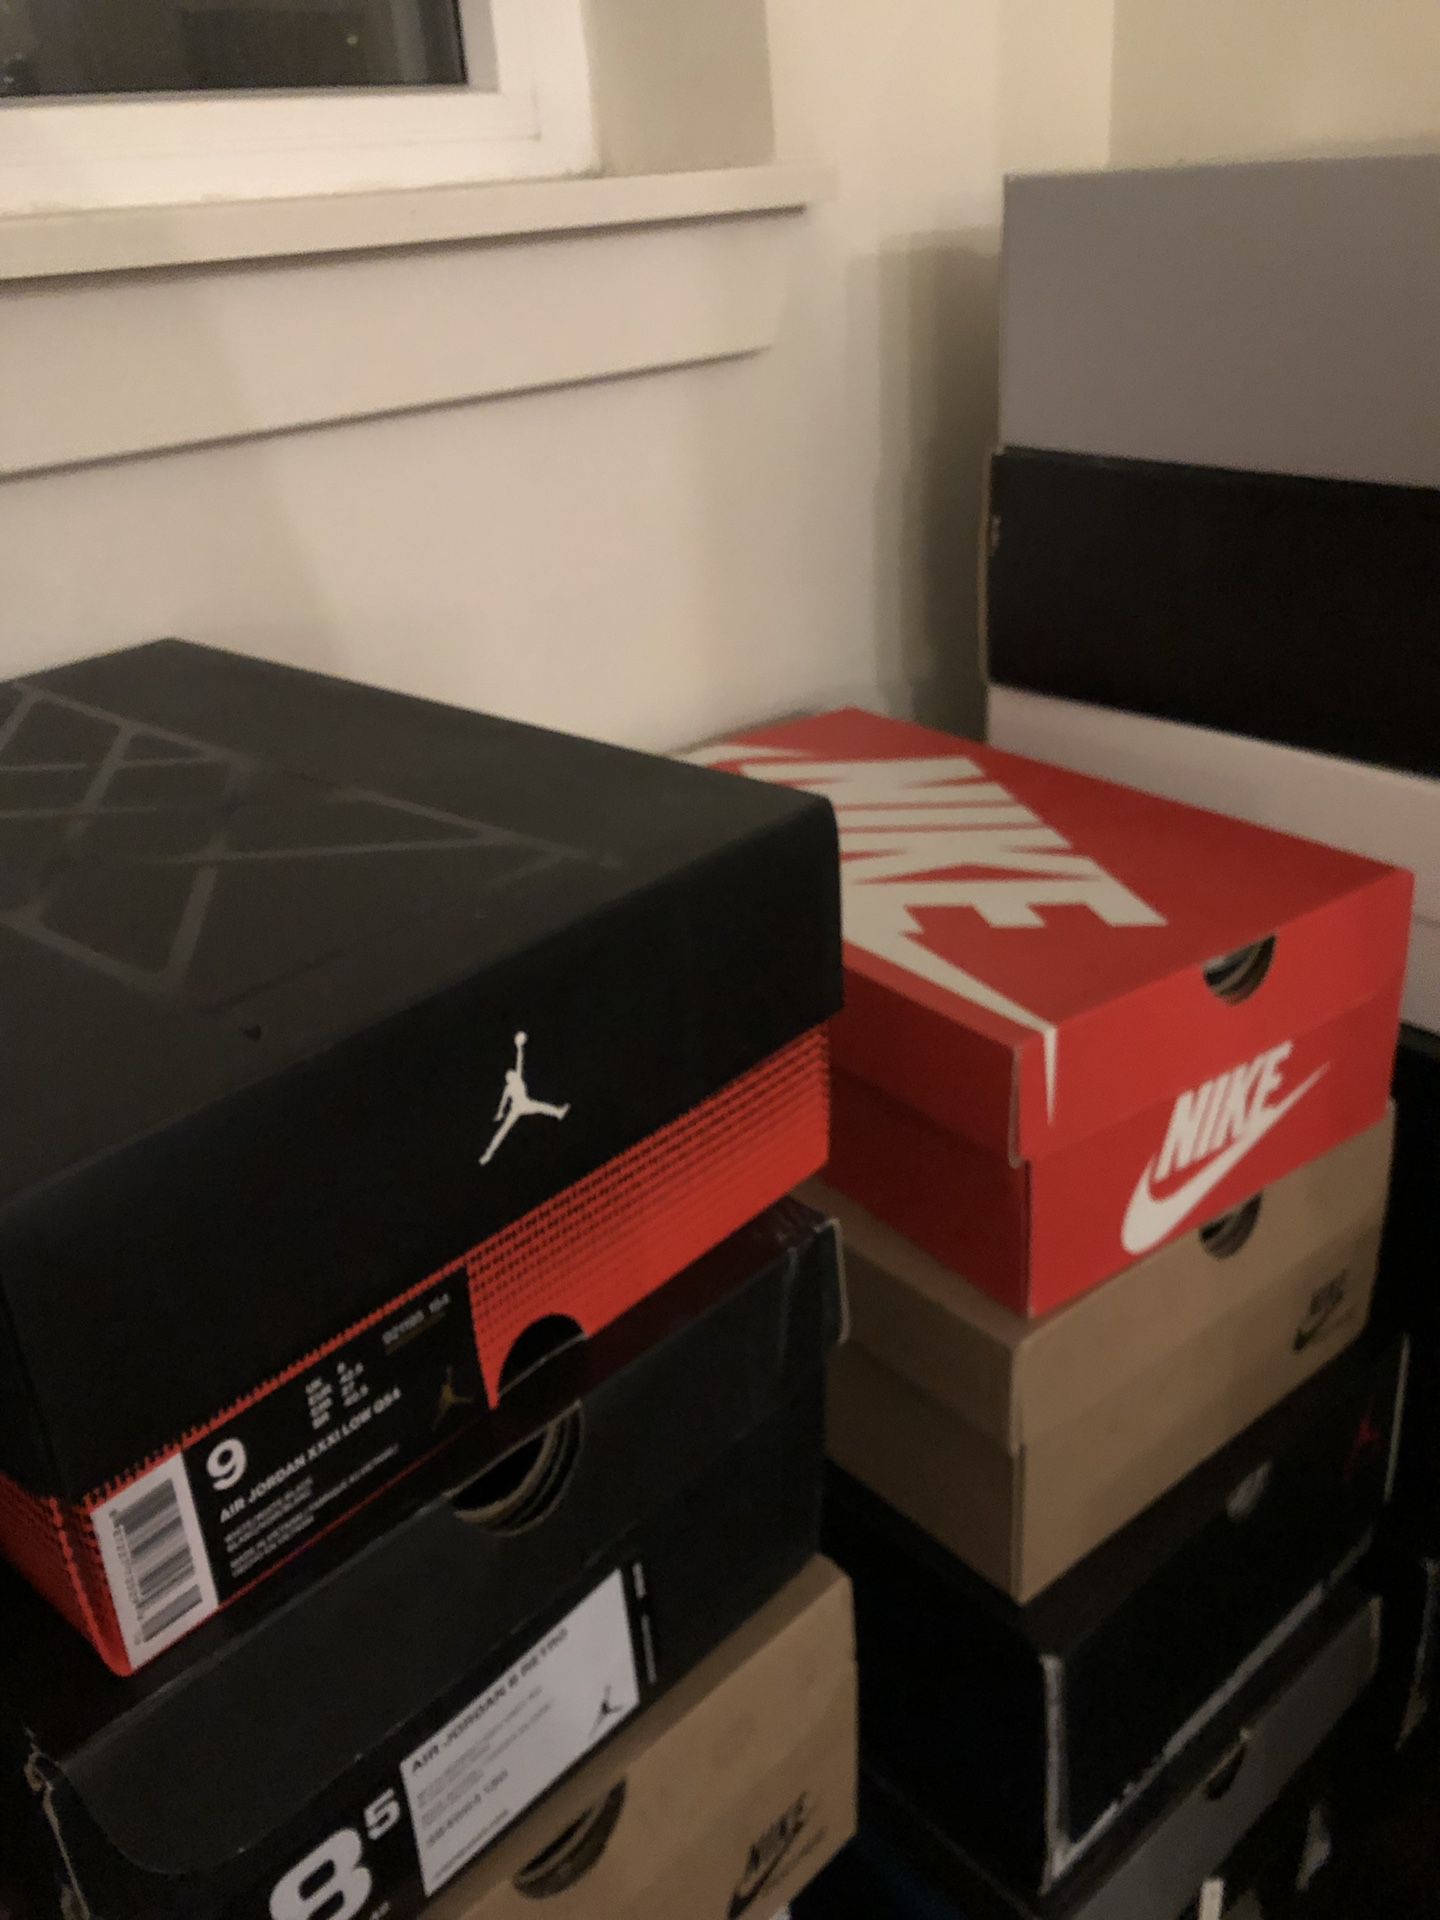 Nike Jordan shoes for sale